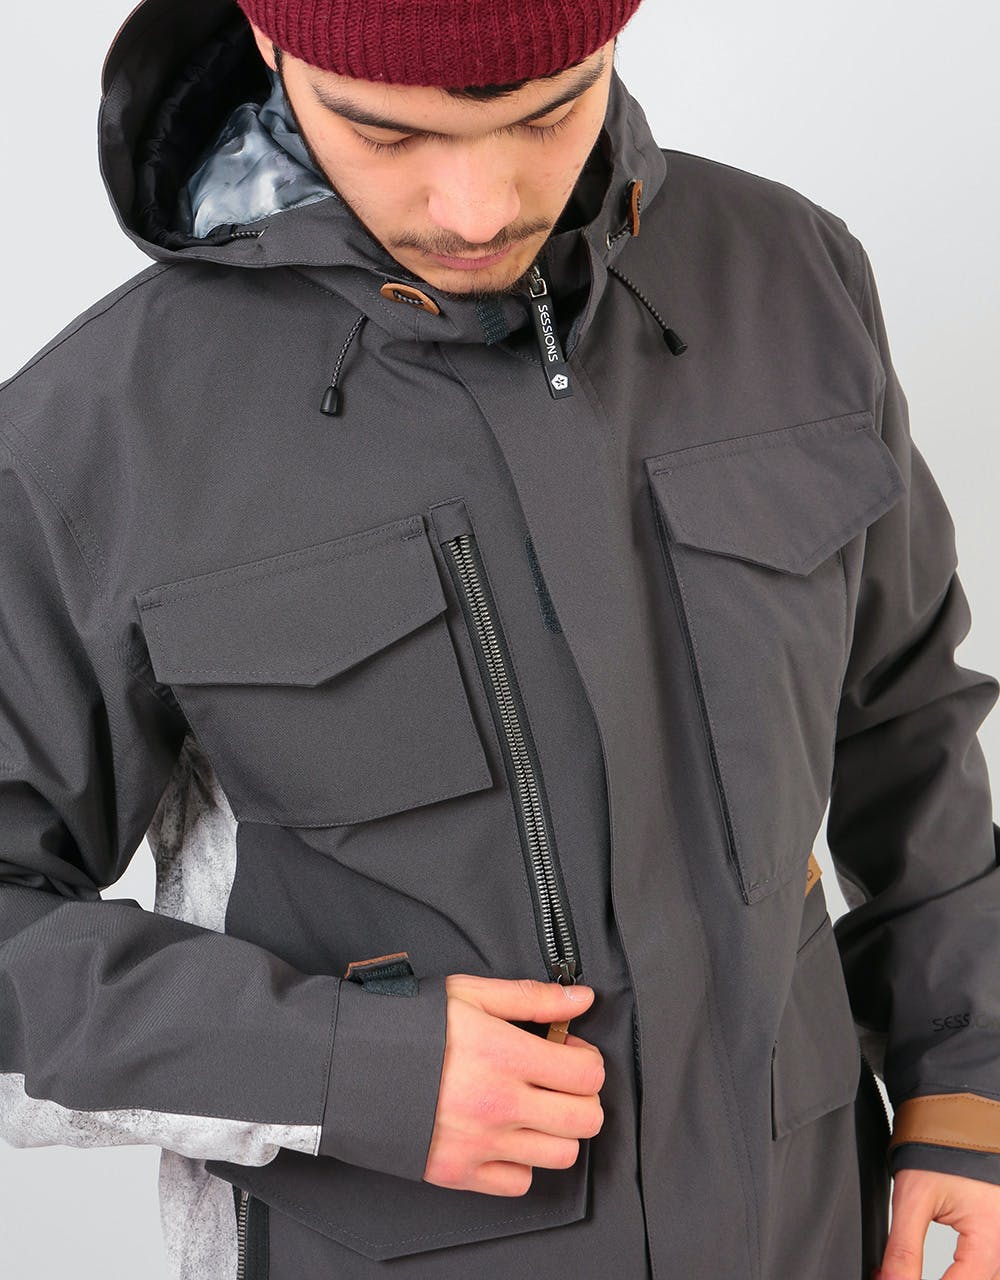 Sessions Ransack Insulated Snowboard Jacket - Dark Grey/Concrete